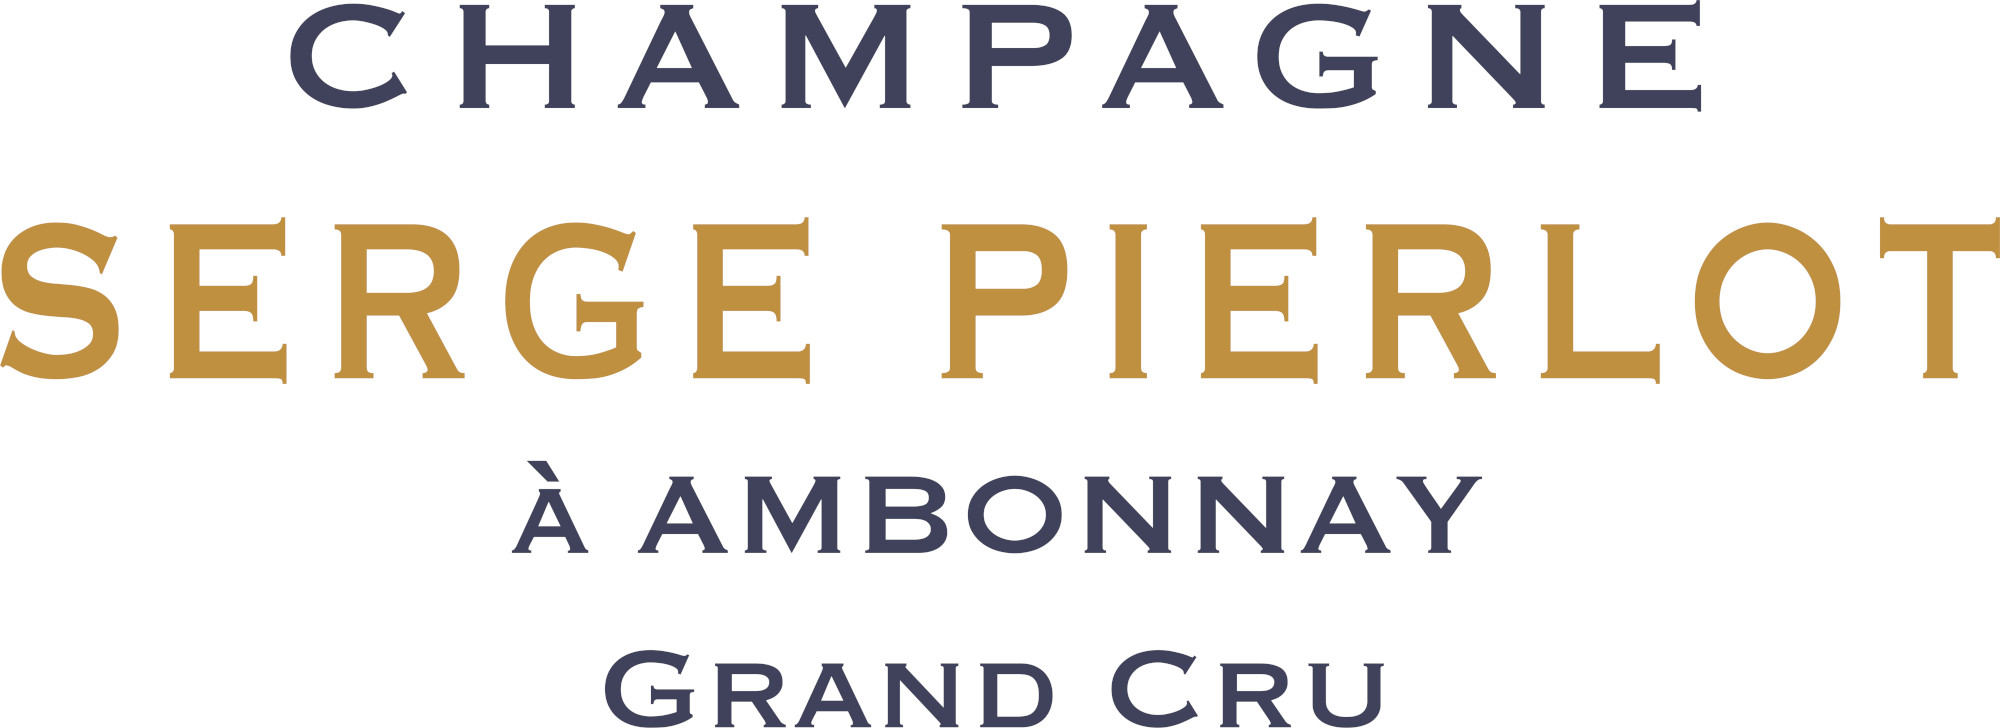 Champagne Serge Pierlot